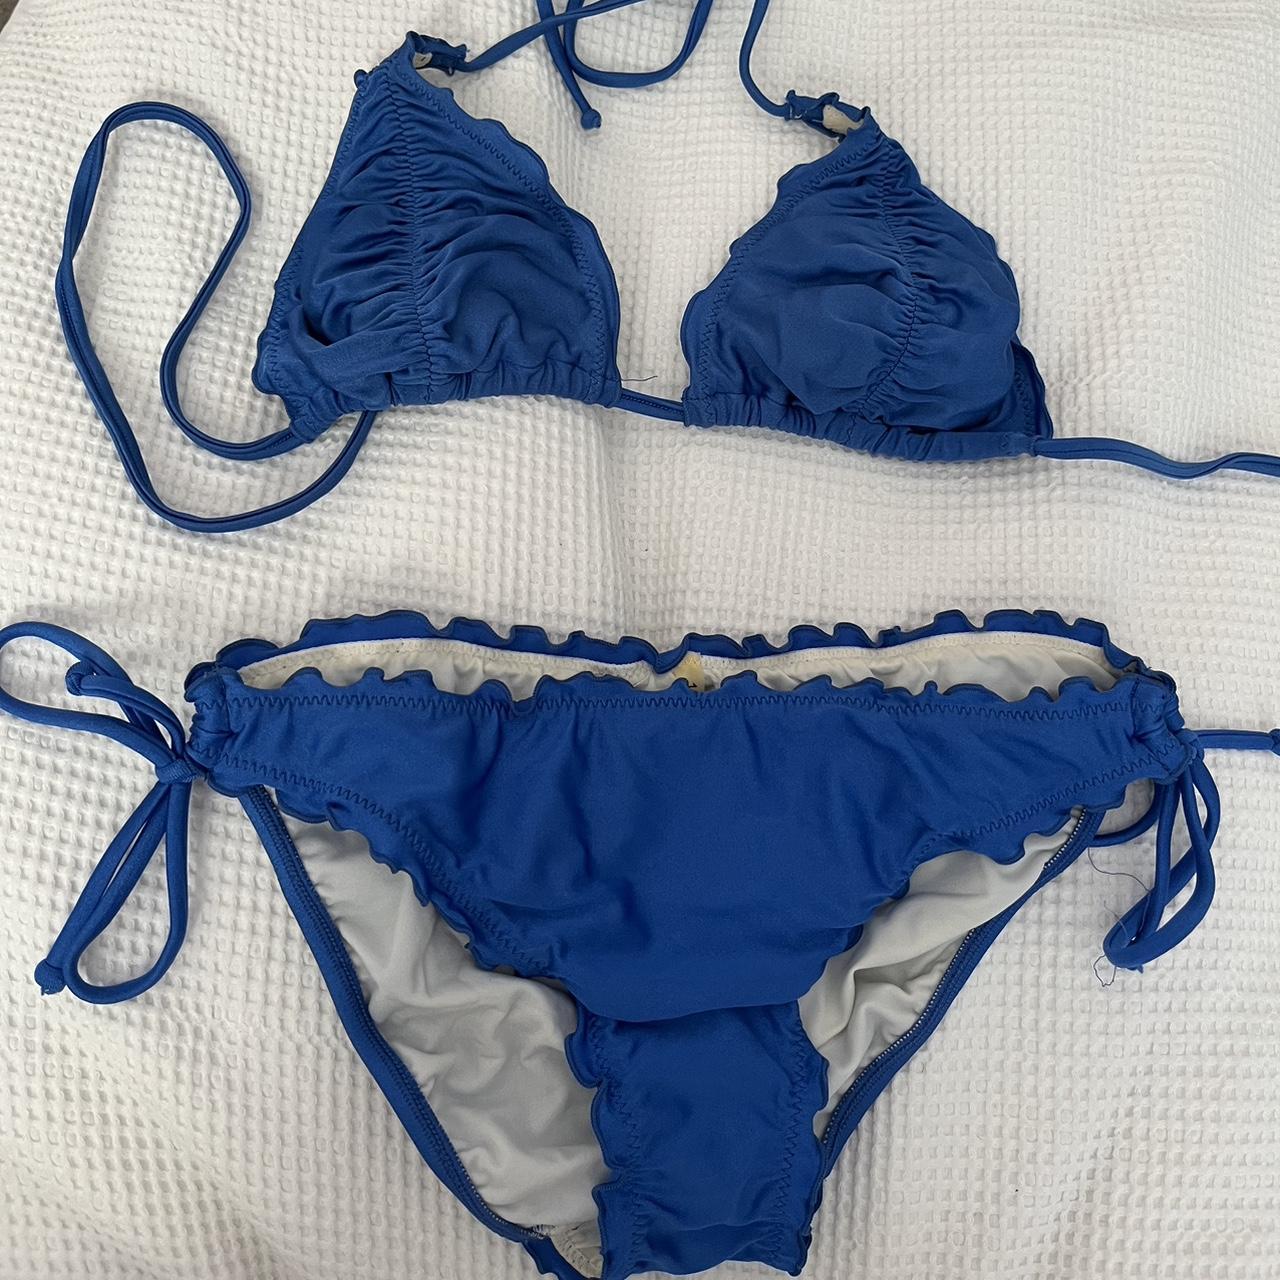 Seafolly Blue Bikini Set - Just wanting to clean... - Depop